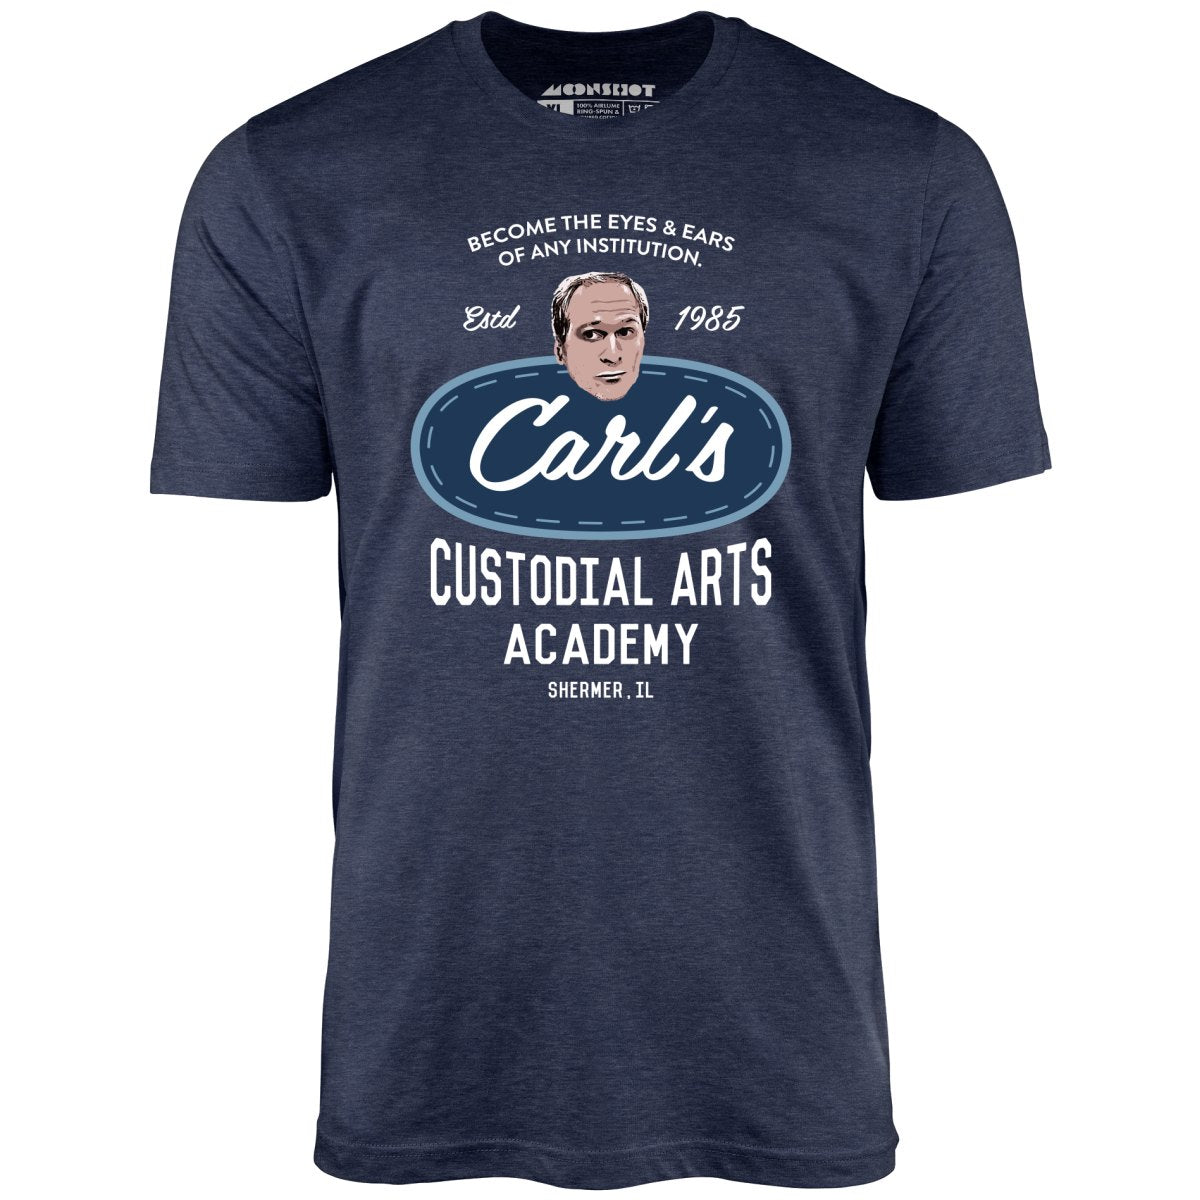 Carl's Custodial Arts Academy - Breakfast Club - Unisex T-Shirt